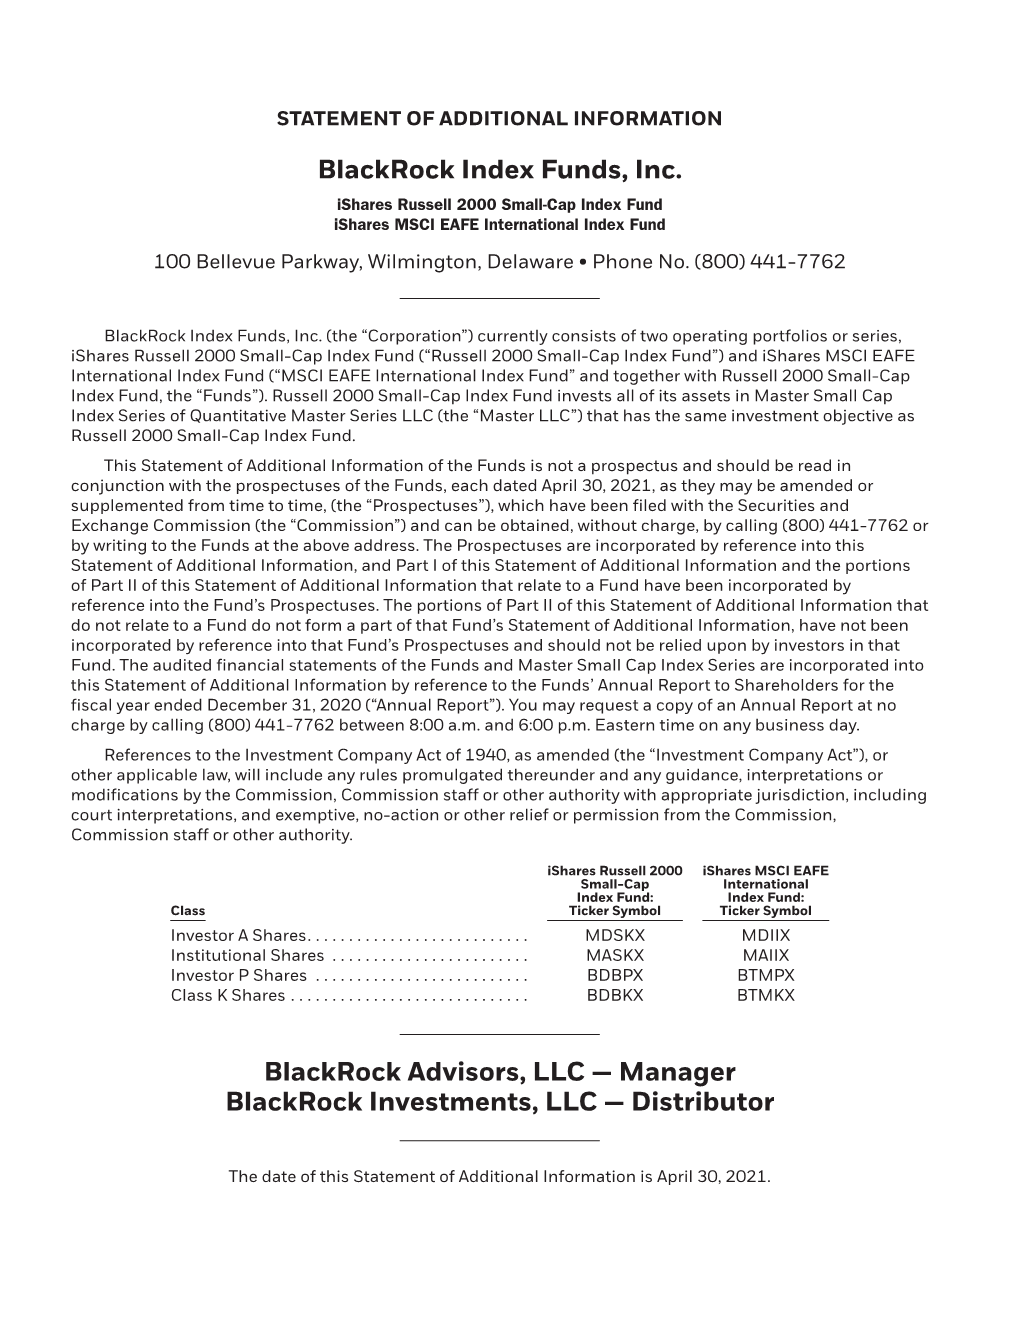 Blackrock Index Funds, Inc. Blackrock Advisors